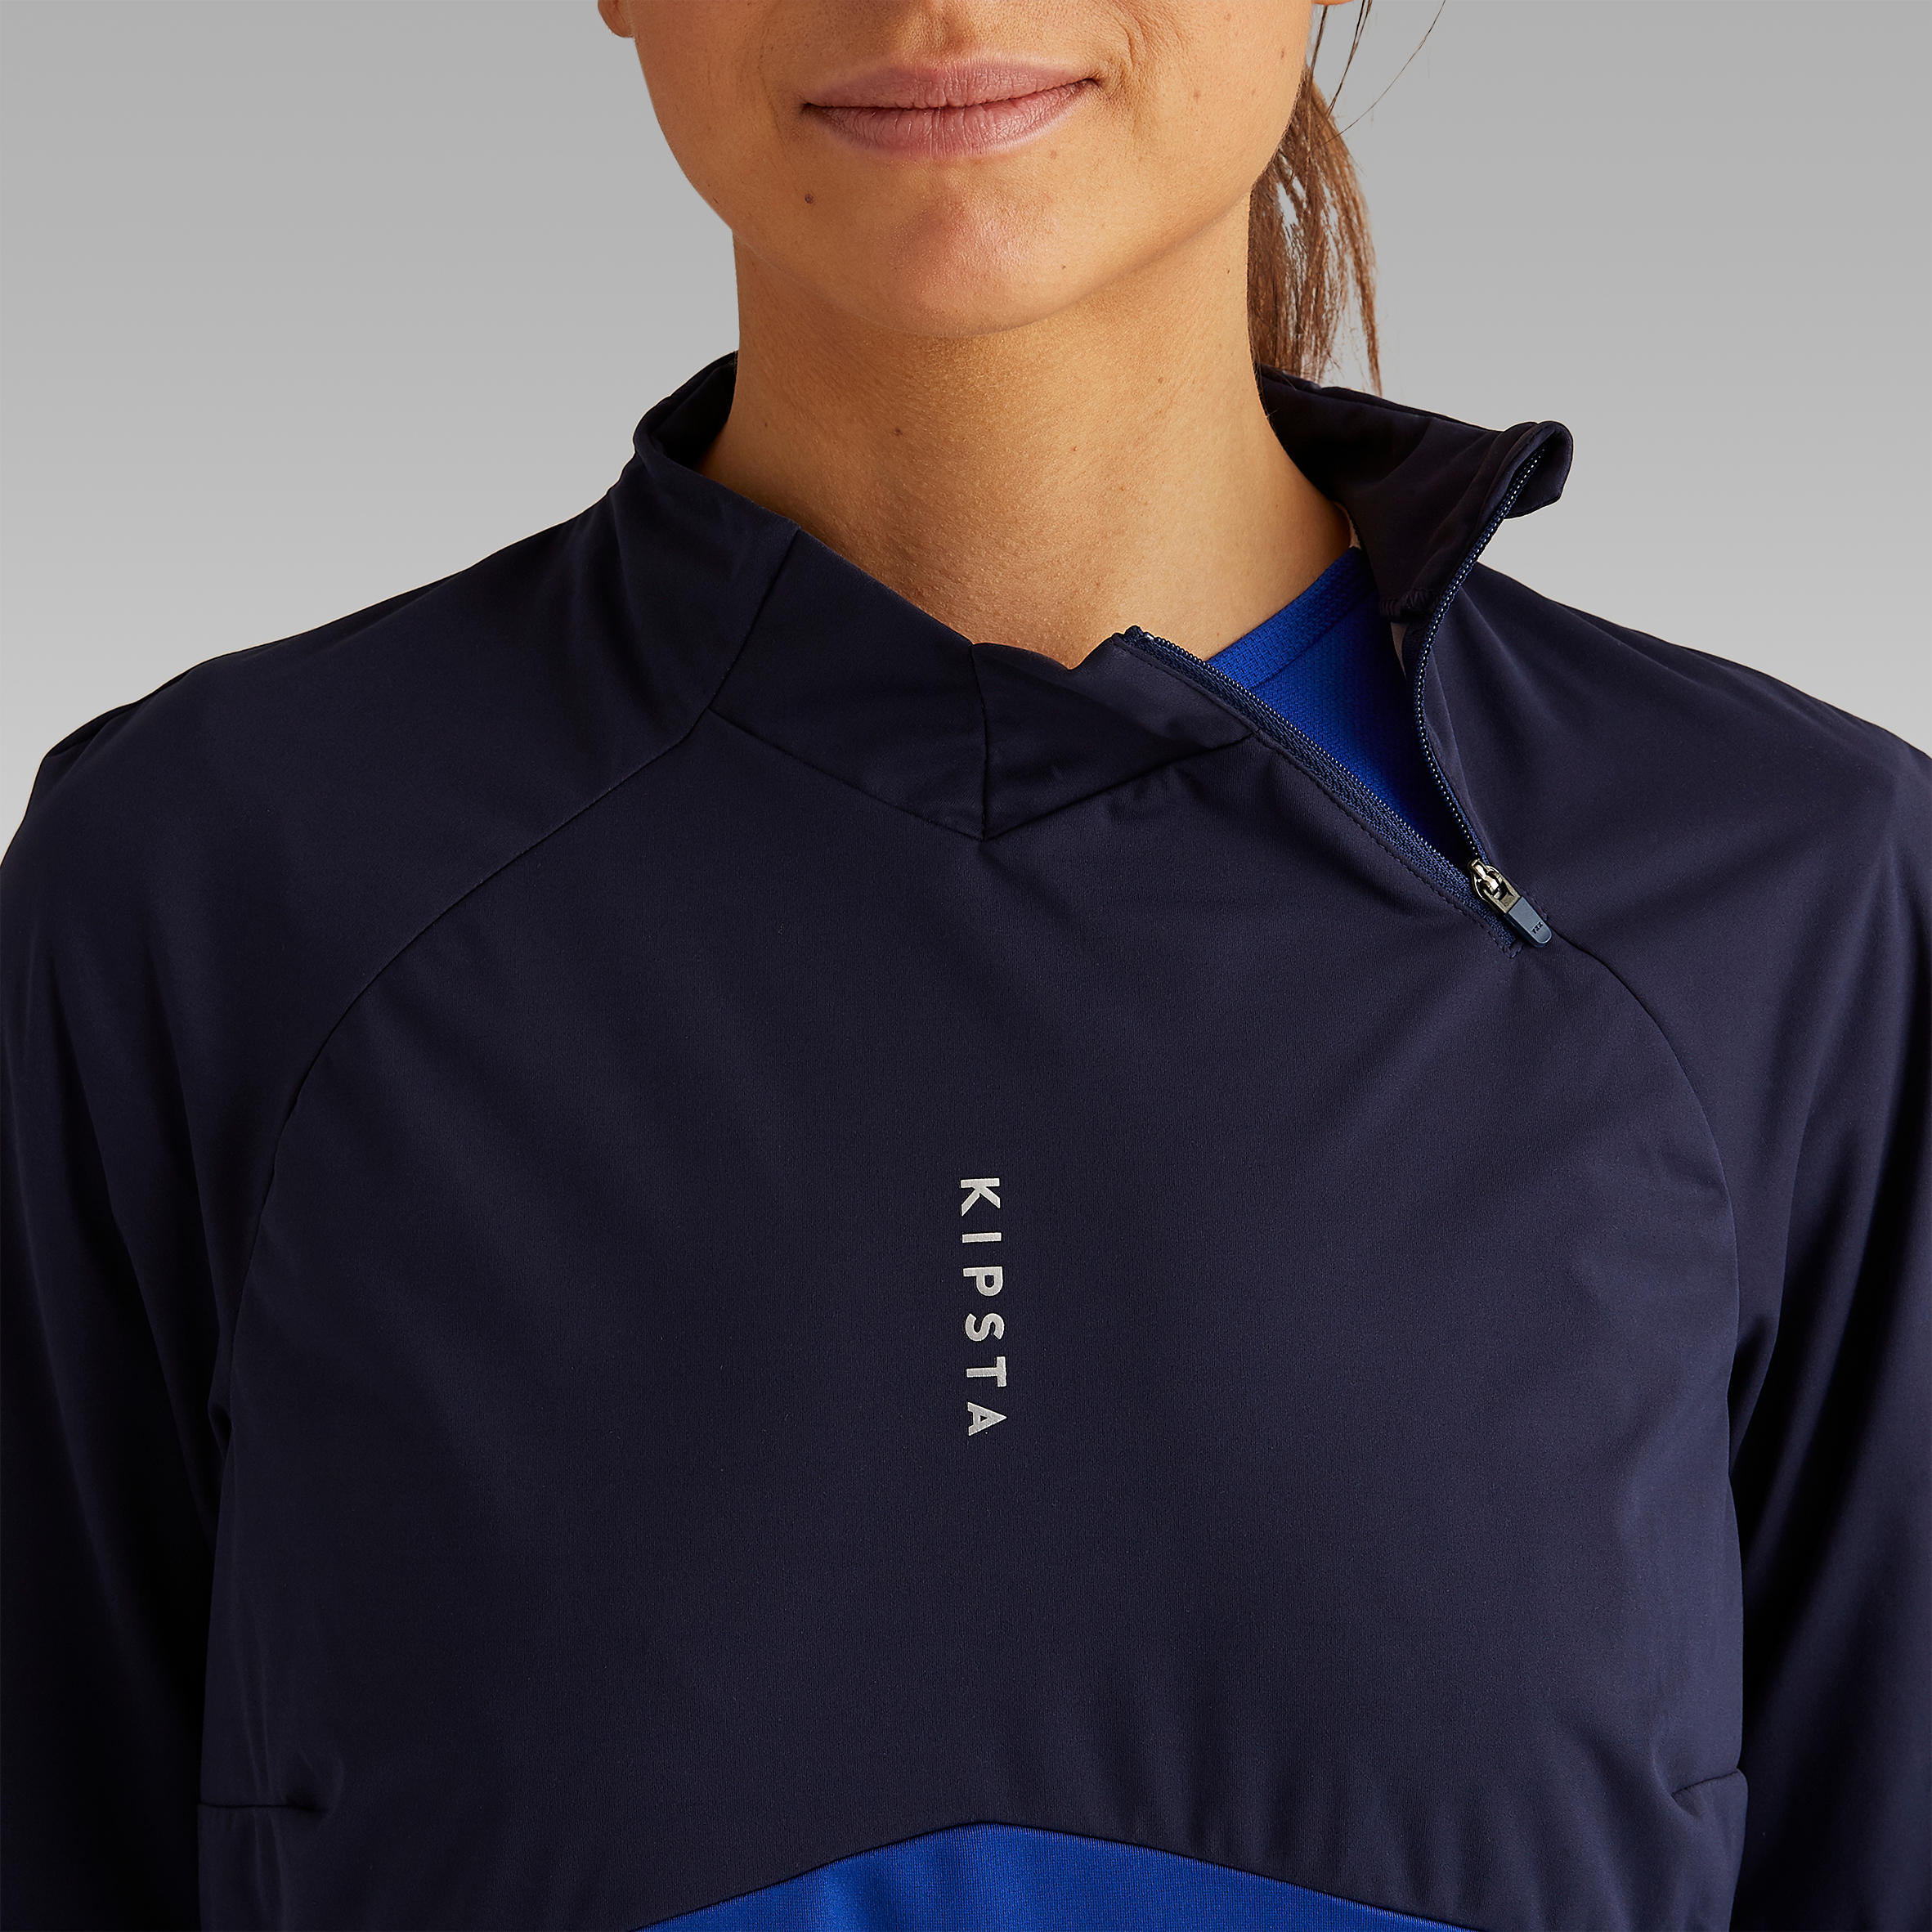 T500 Women's Football Training Sweatshirt - Blue 8/14